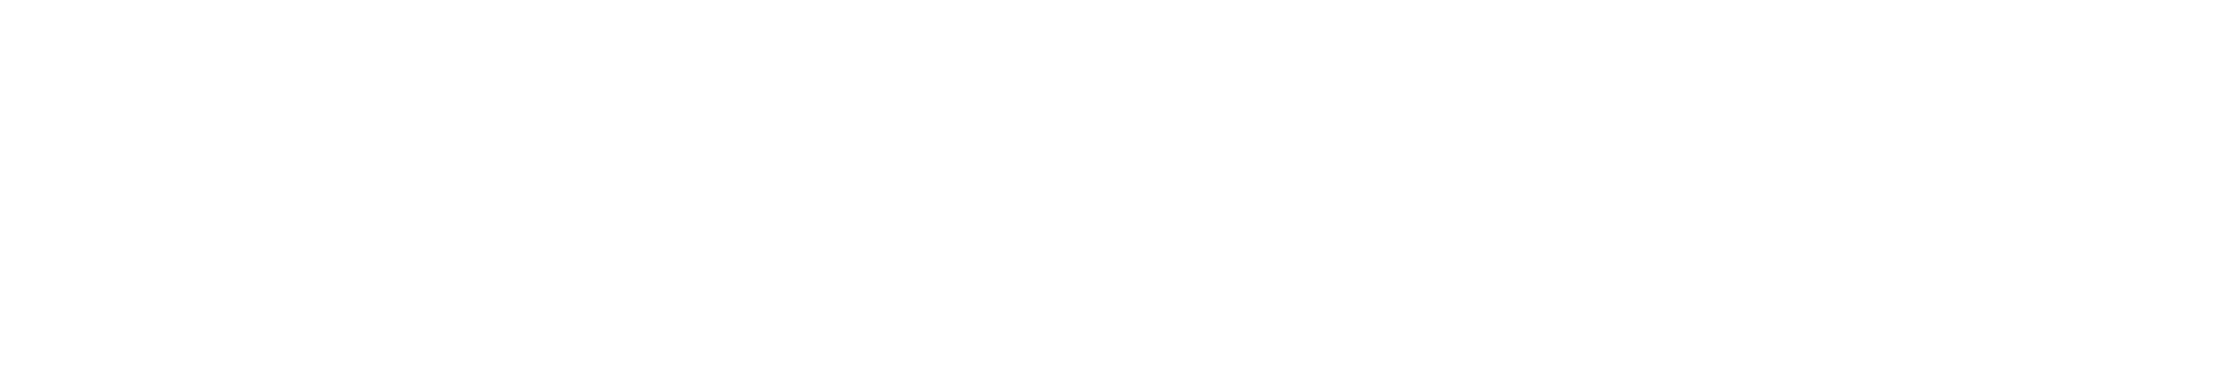 JAPAN FOR UNHCR